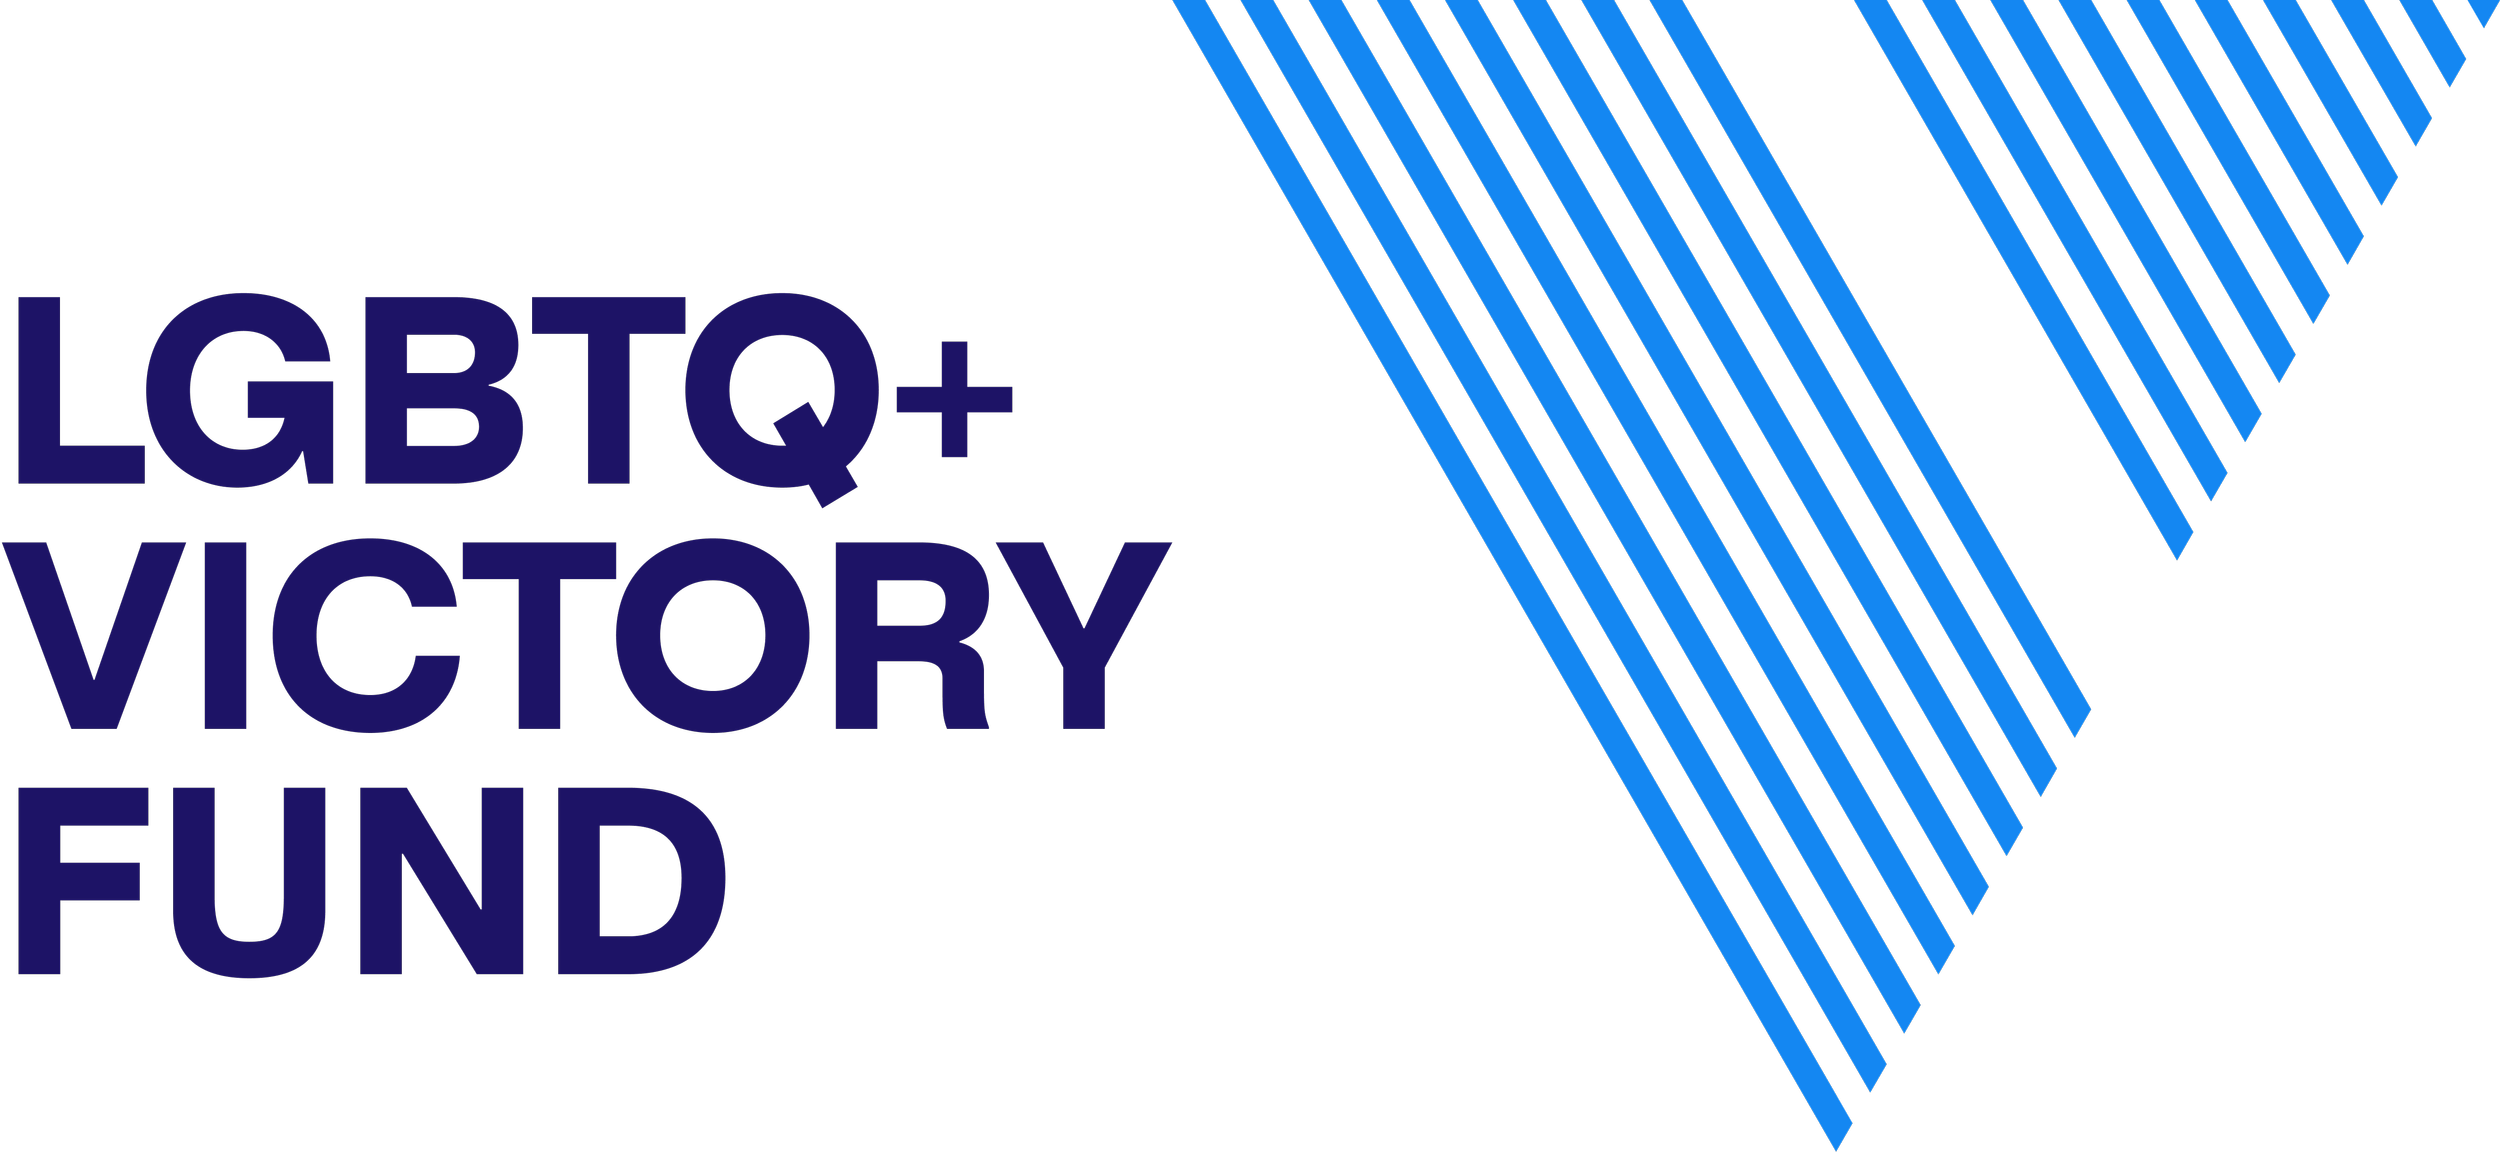 LGBTQ+ Victory Fund Logo.png